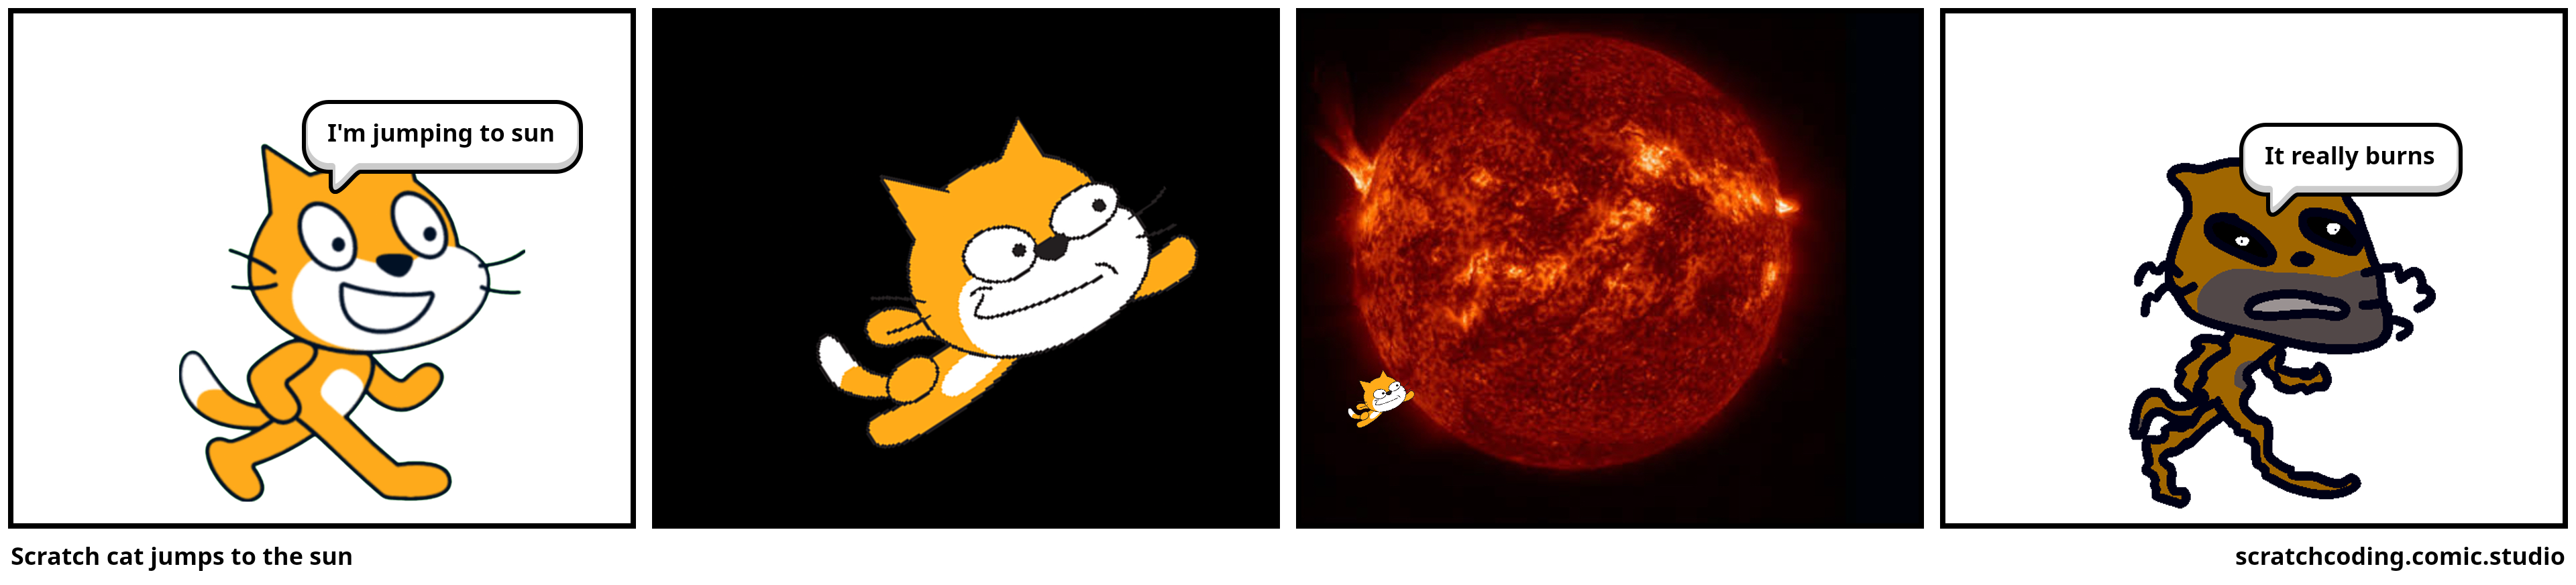 Scratch cat jumps to the sun